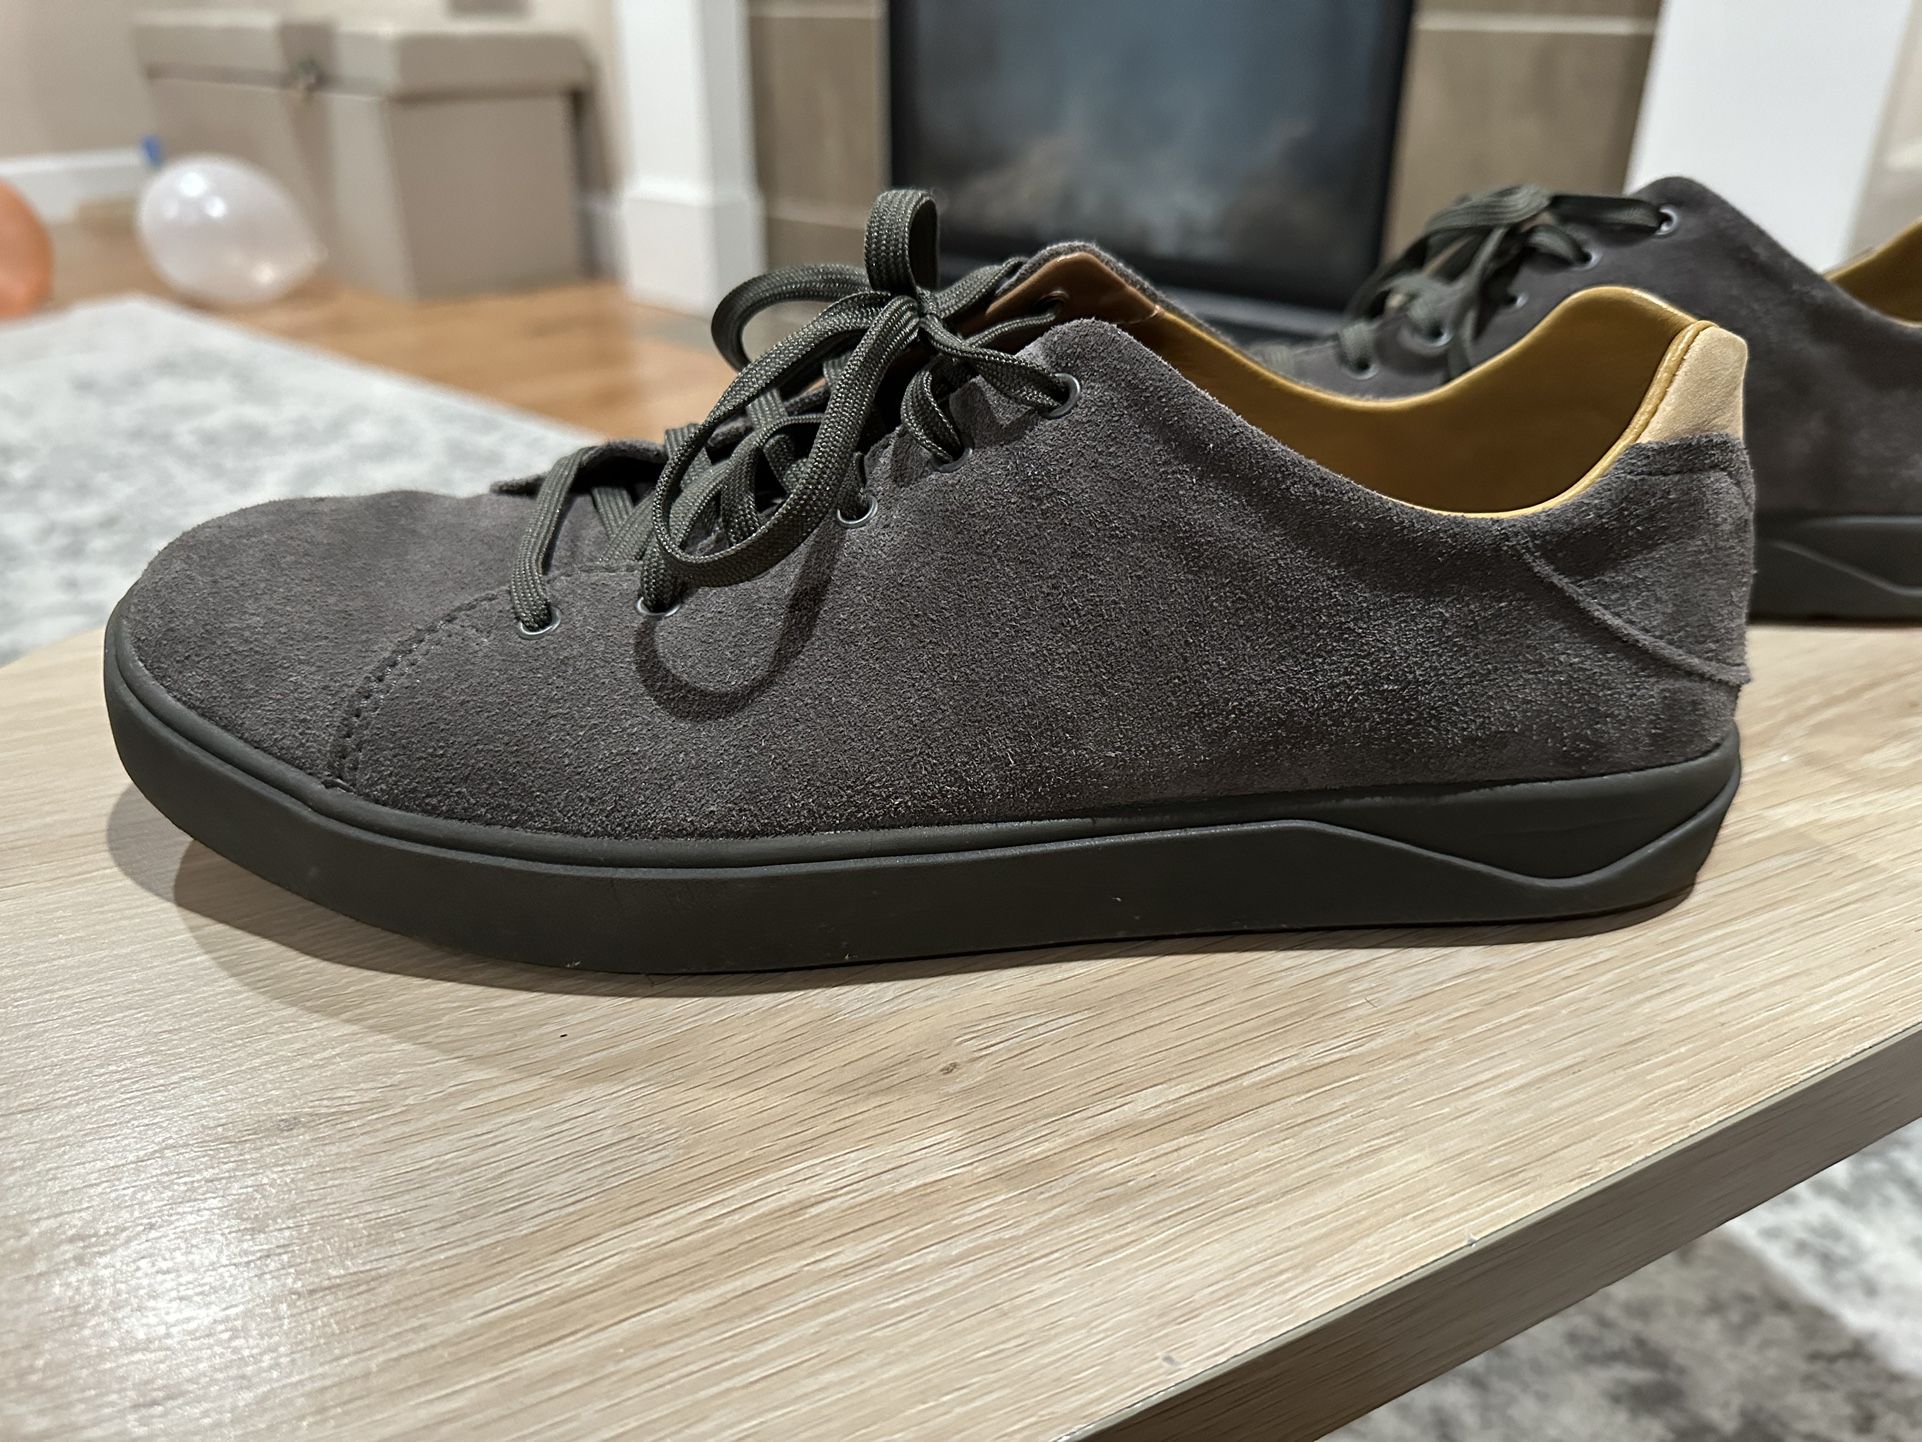 Men’s OluKai Black Shoes Size 10.5 for Sale in Kirkland, WA - OfferUp